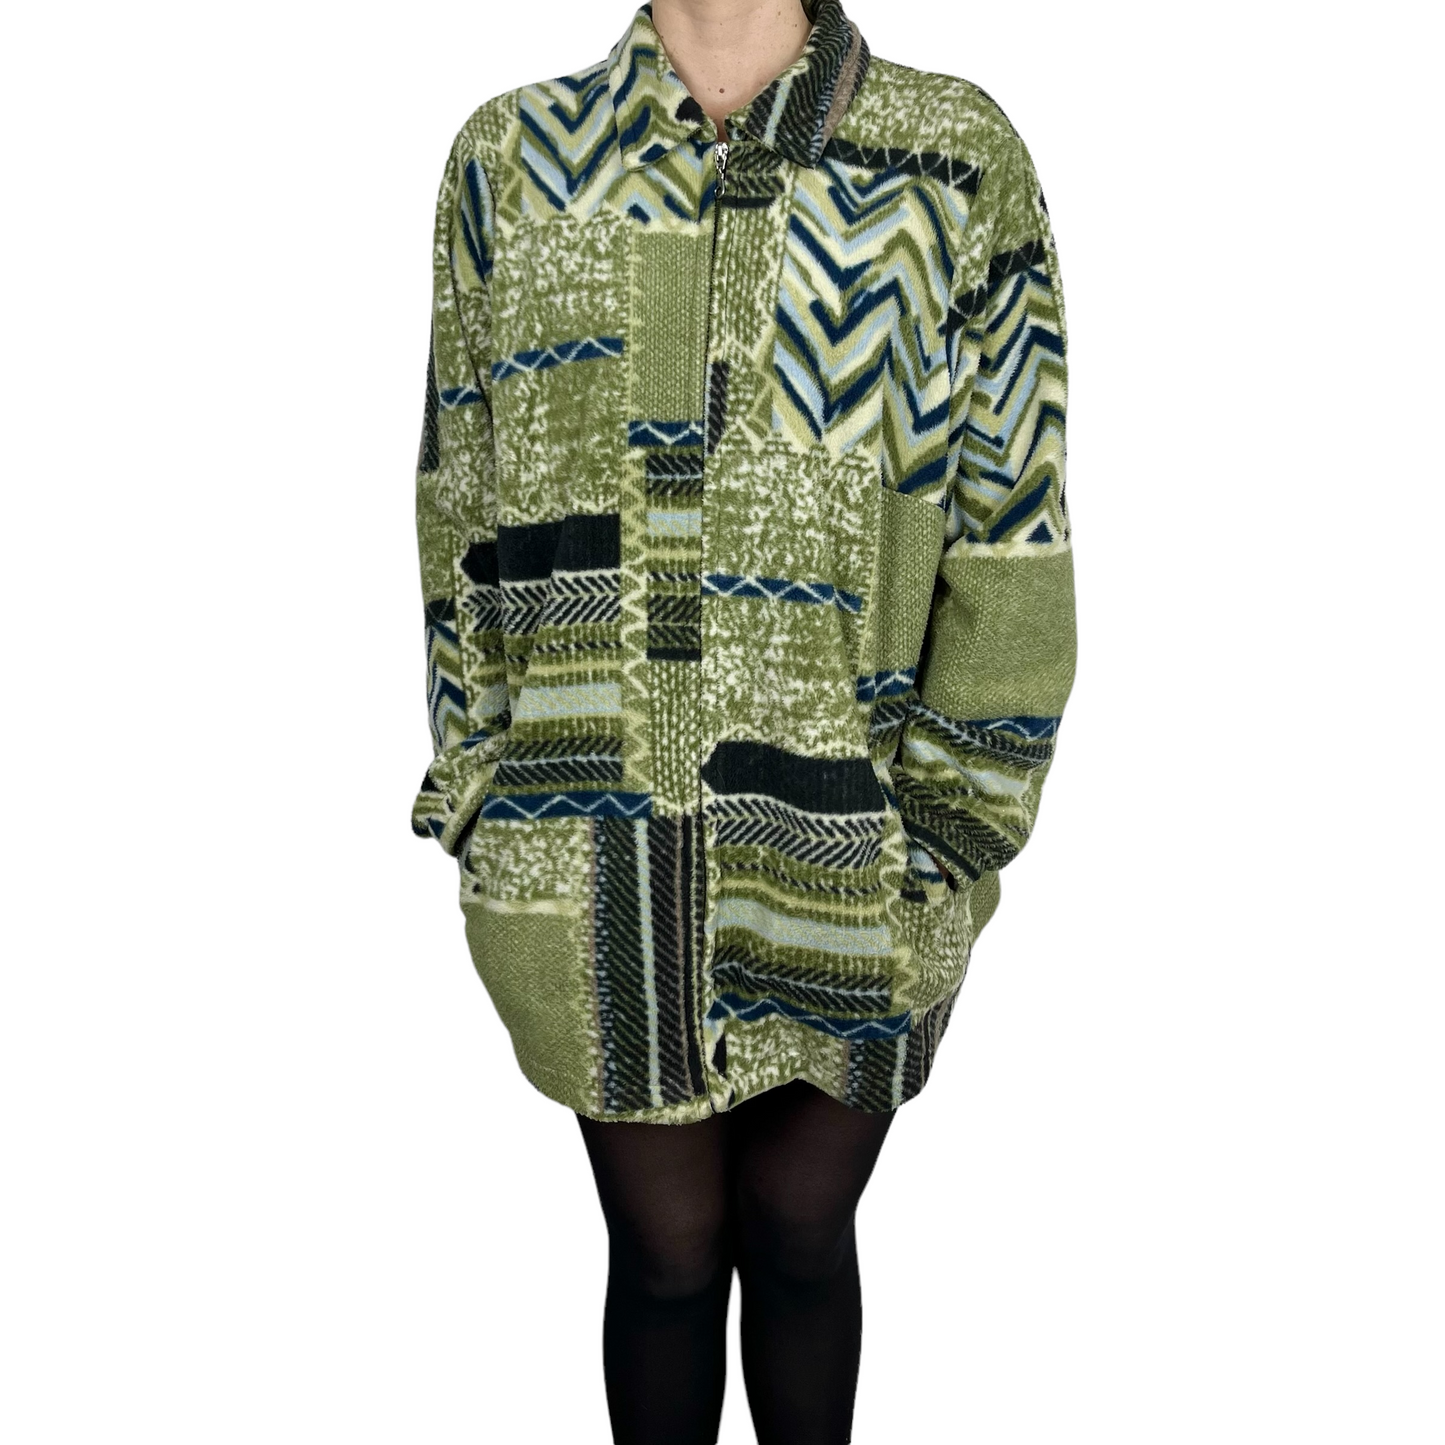 Women’s Vintage Patterned Fleece - Large